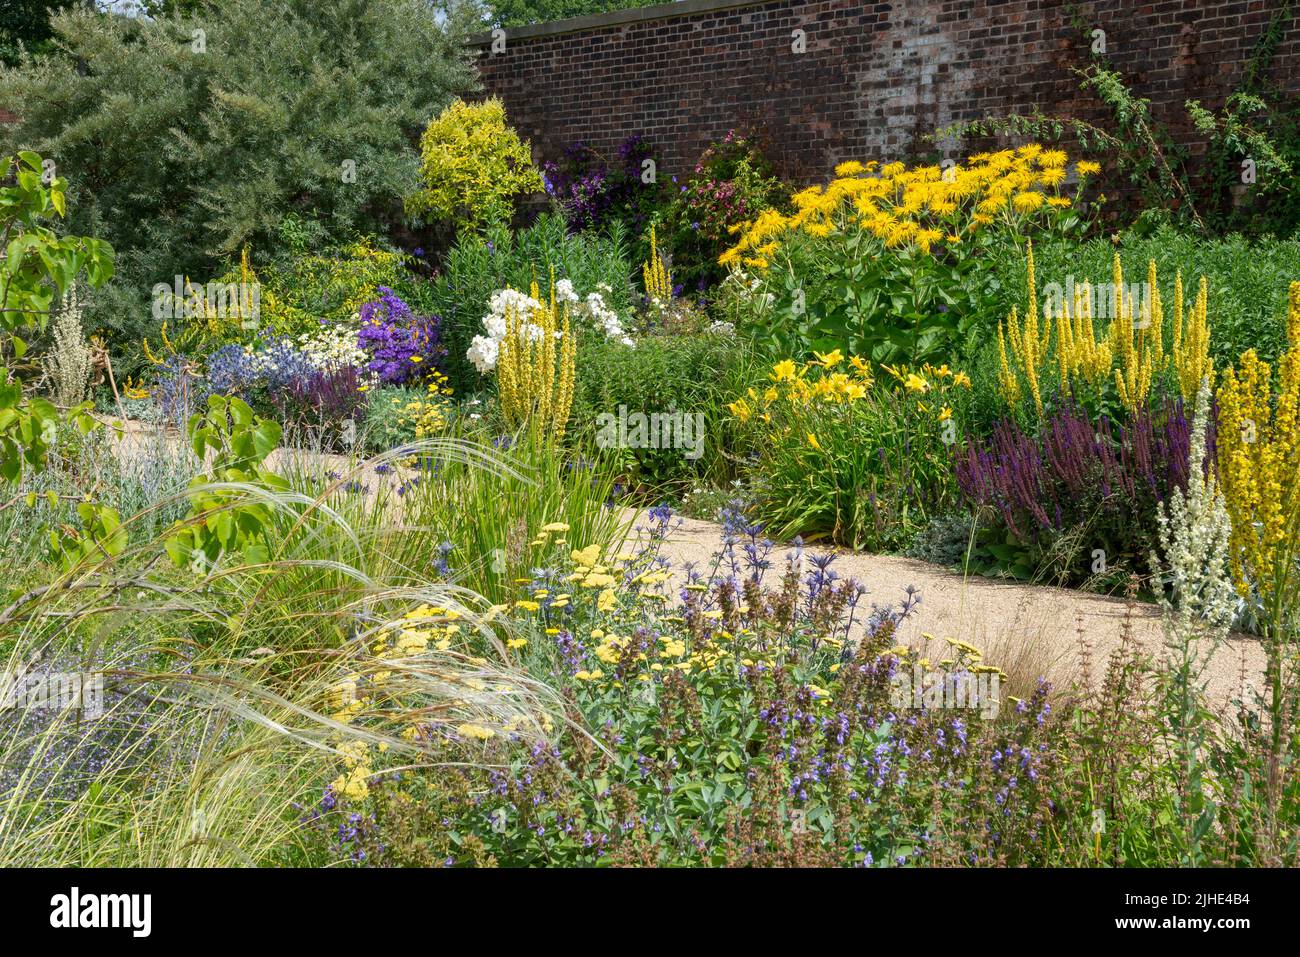 RHS Bridgewater garden, near Manchester, England in mid summer. The paradise garden with mixed perennials and shrubs. Stock Photo